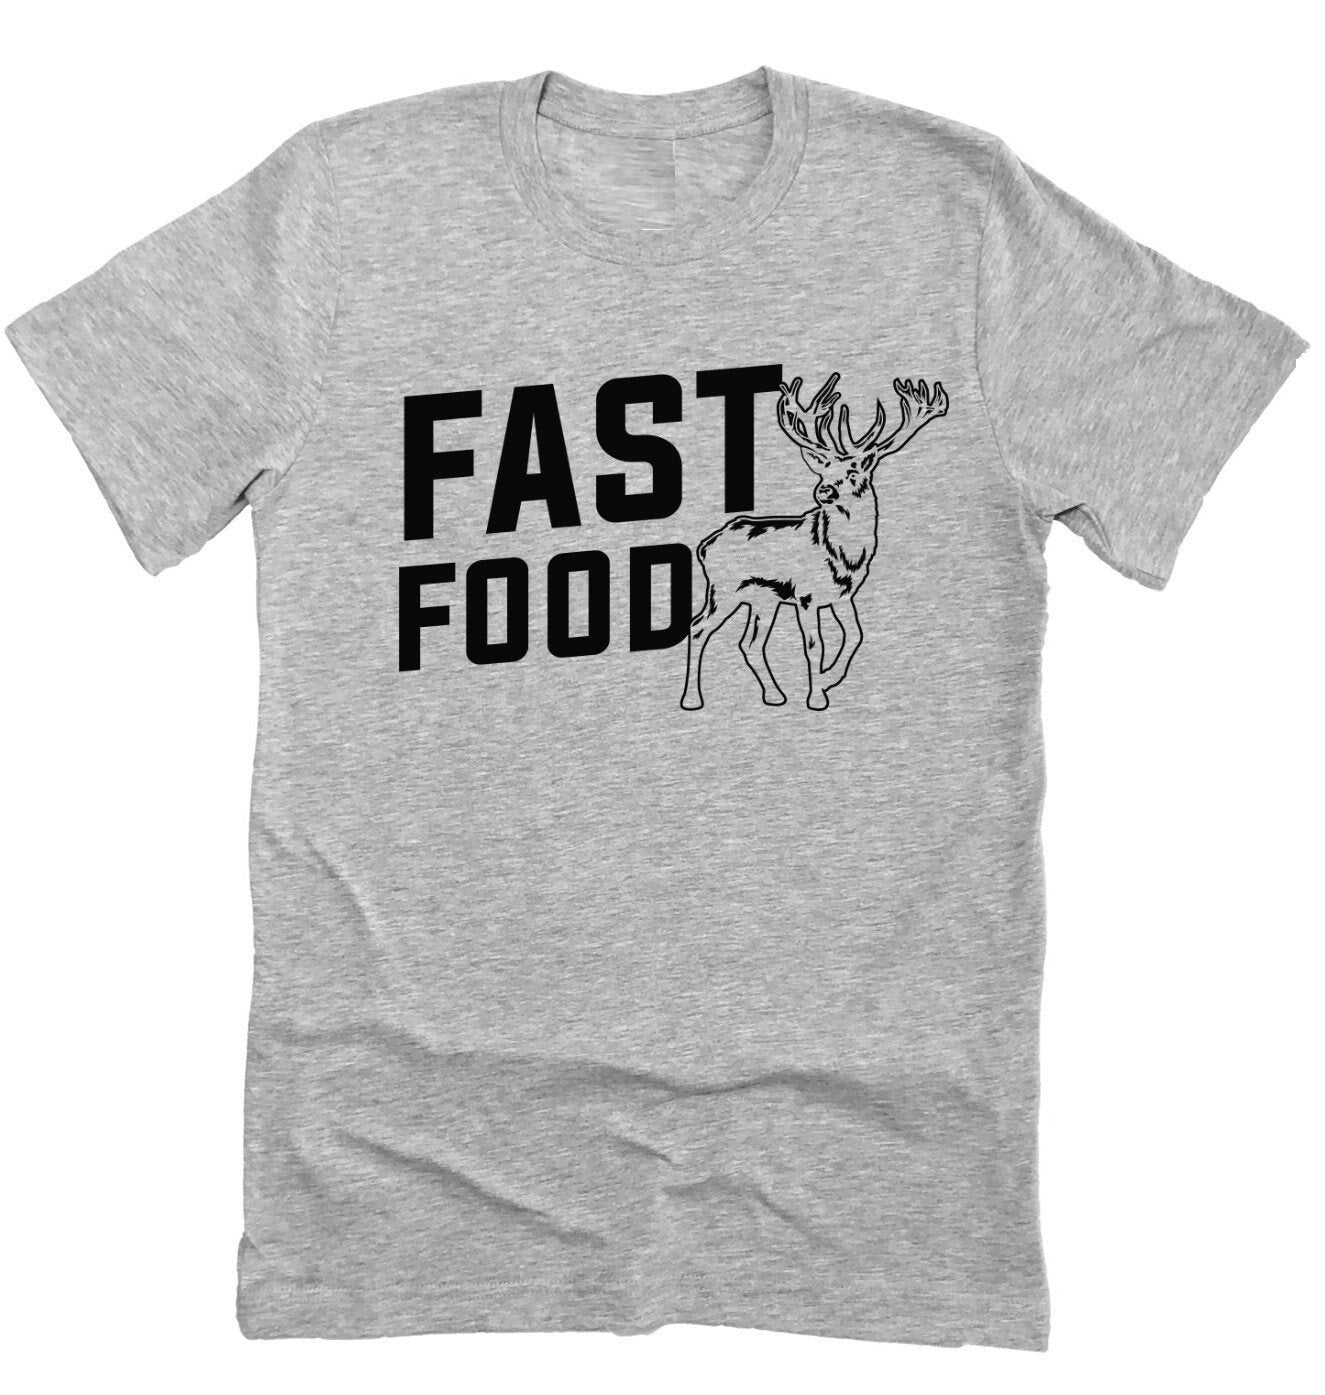 Fast Food Funny Hunting Tee, Mens Deer Hunter T-shirt Tee Shirt Unisex Novelty T-Shirt